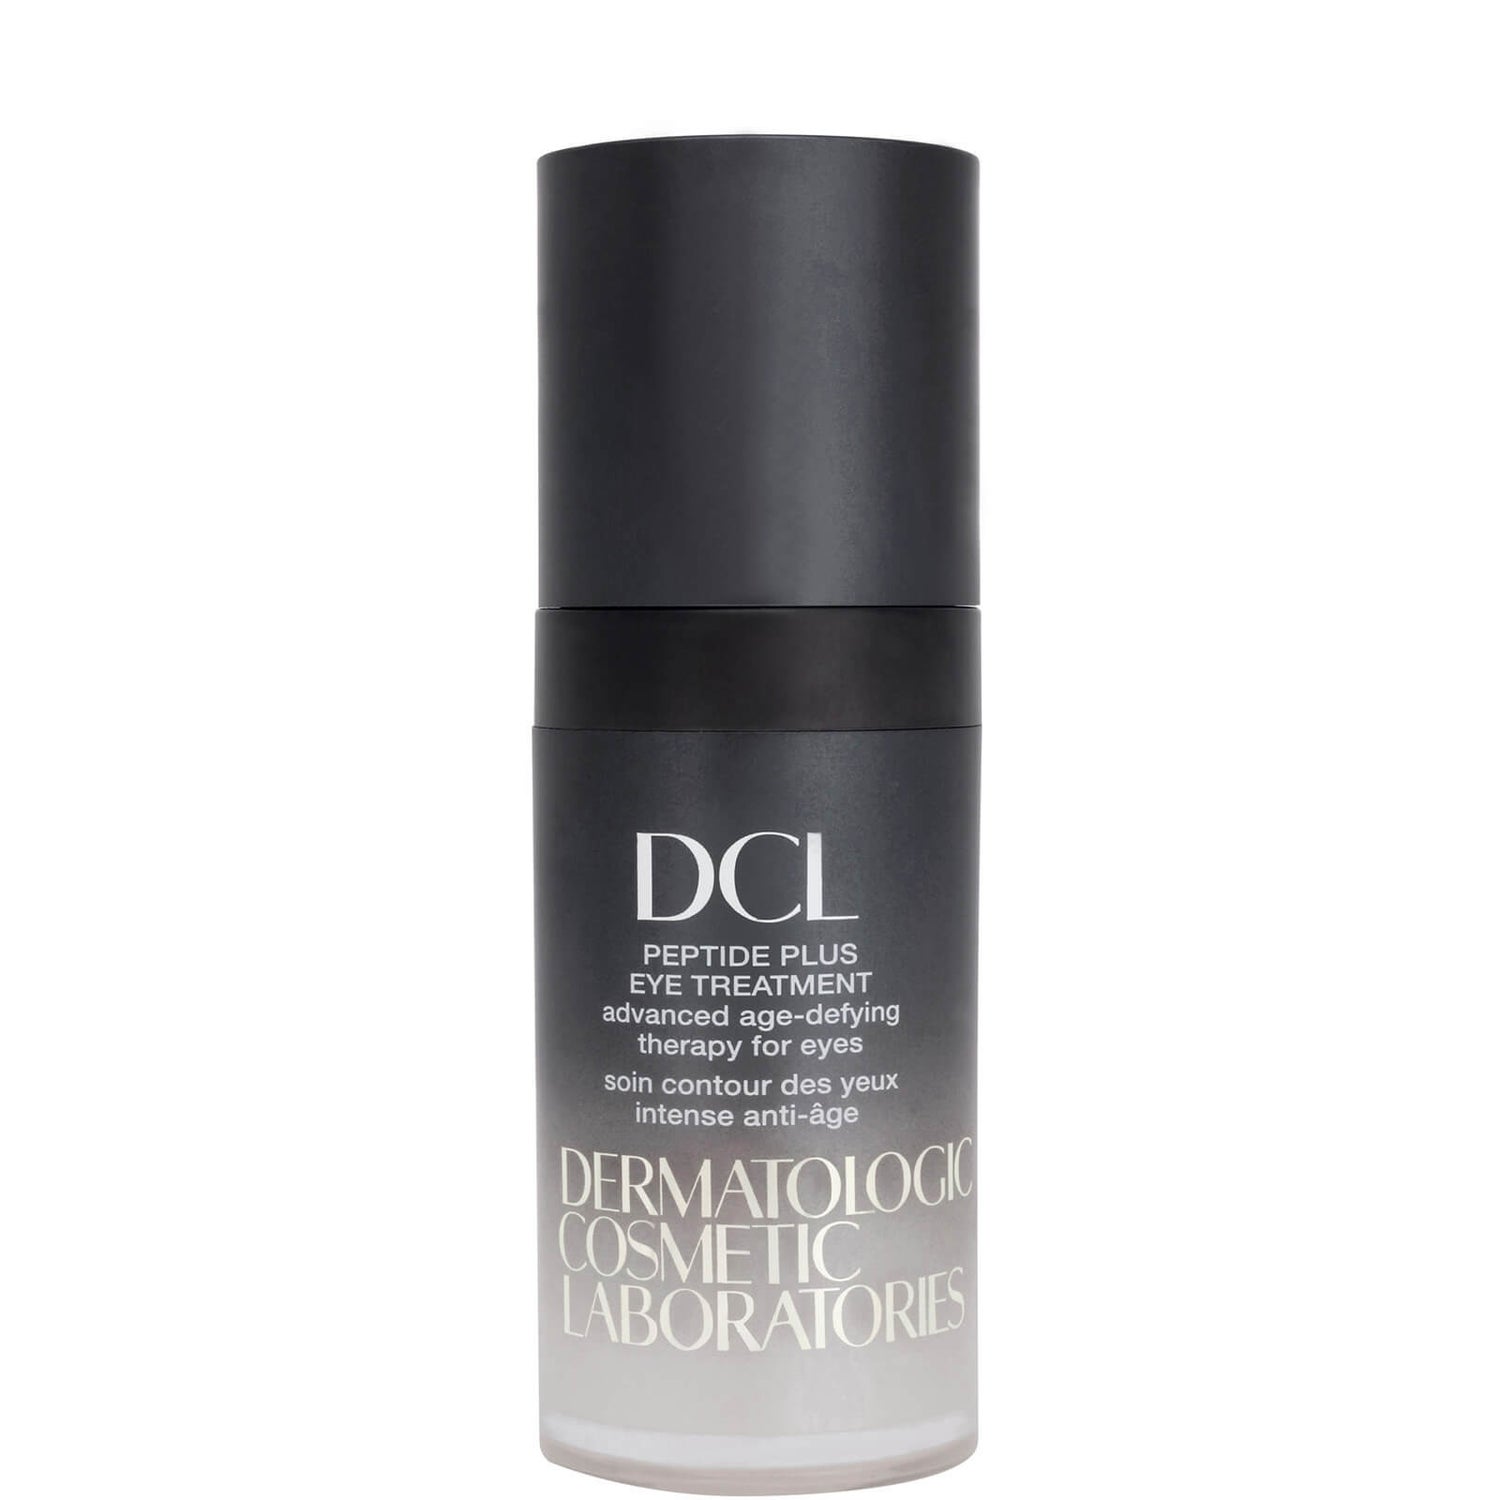 DCL Dermatologic Cosmetic Laboratories Peptide Plus Eye Treatment (0.5 fl. oz.)